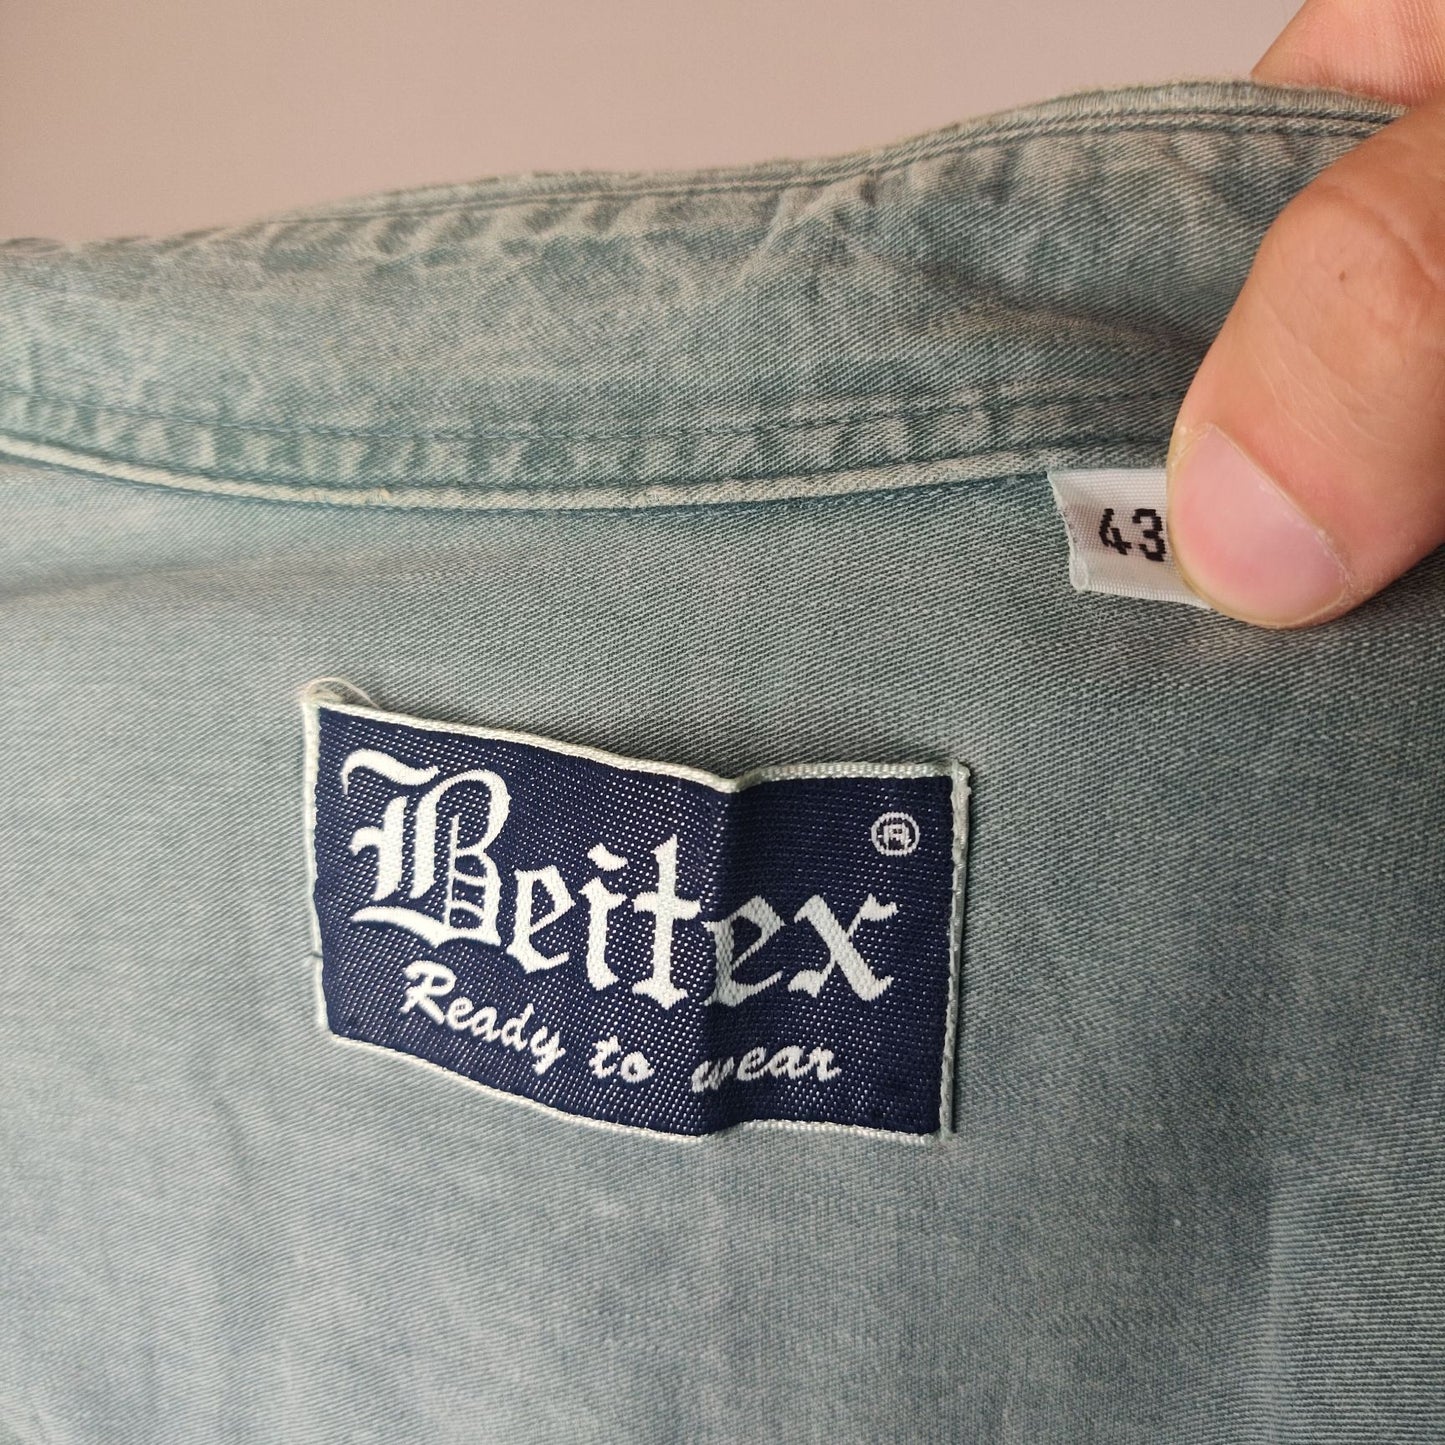 Beitex Green Jeans Button Up Shirt Men Size 43